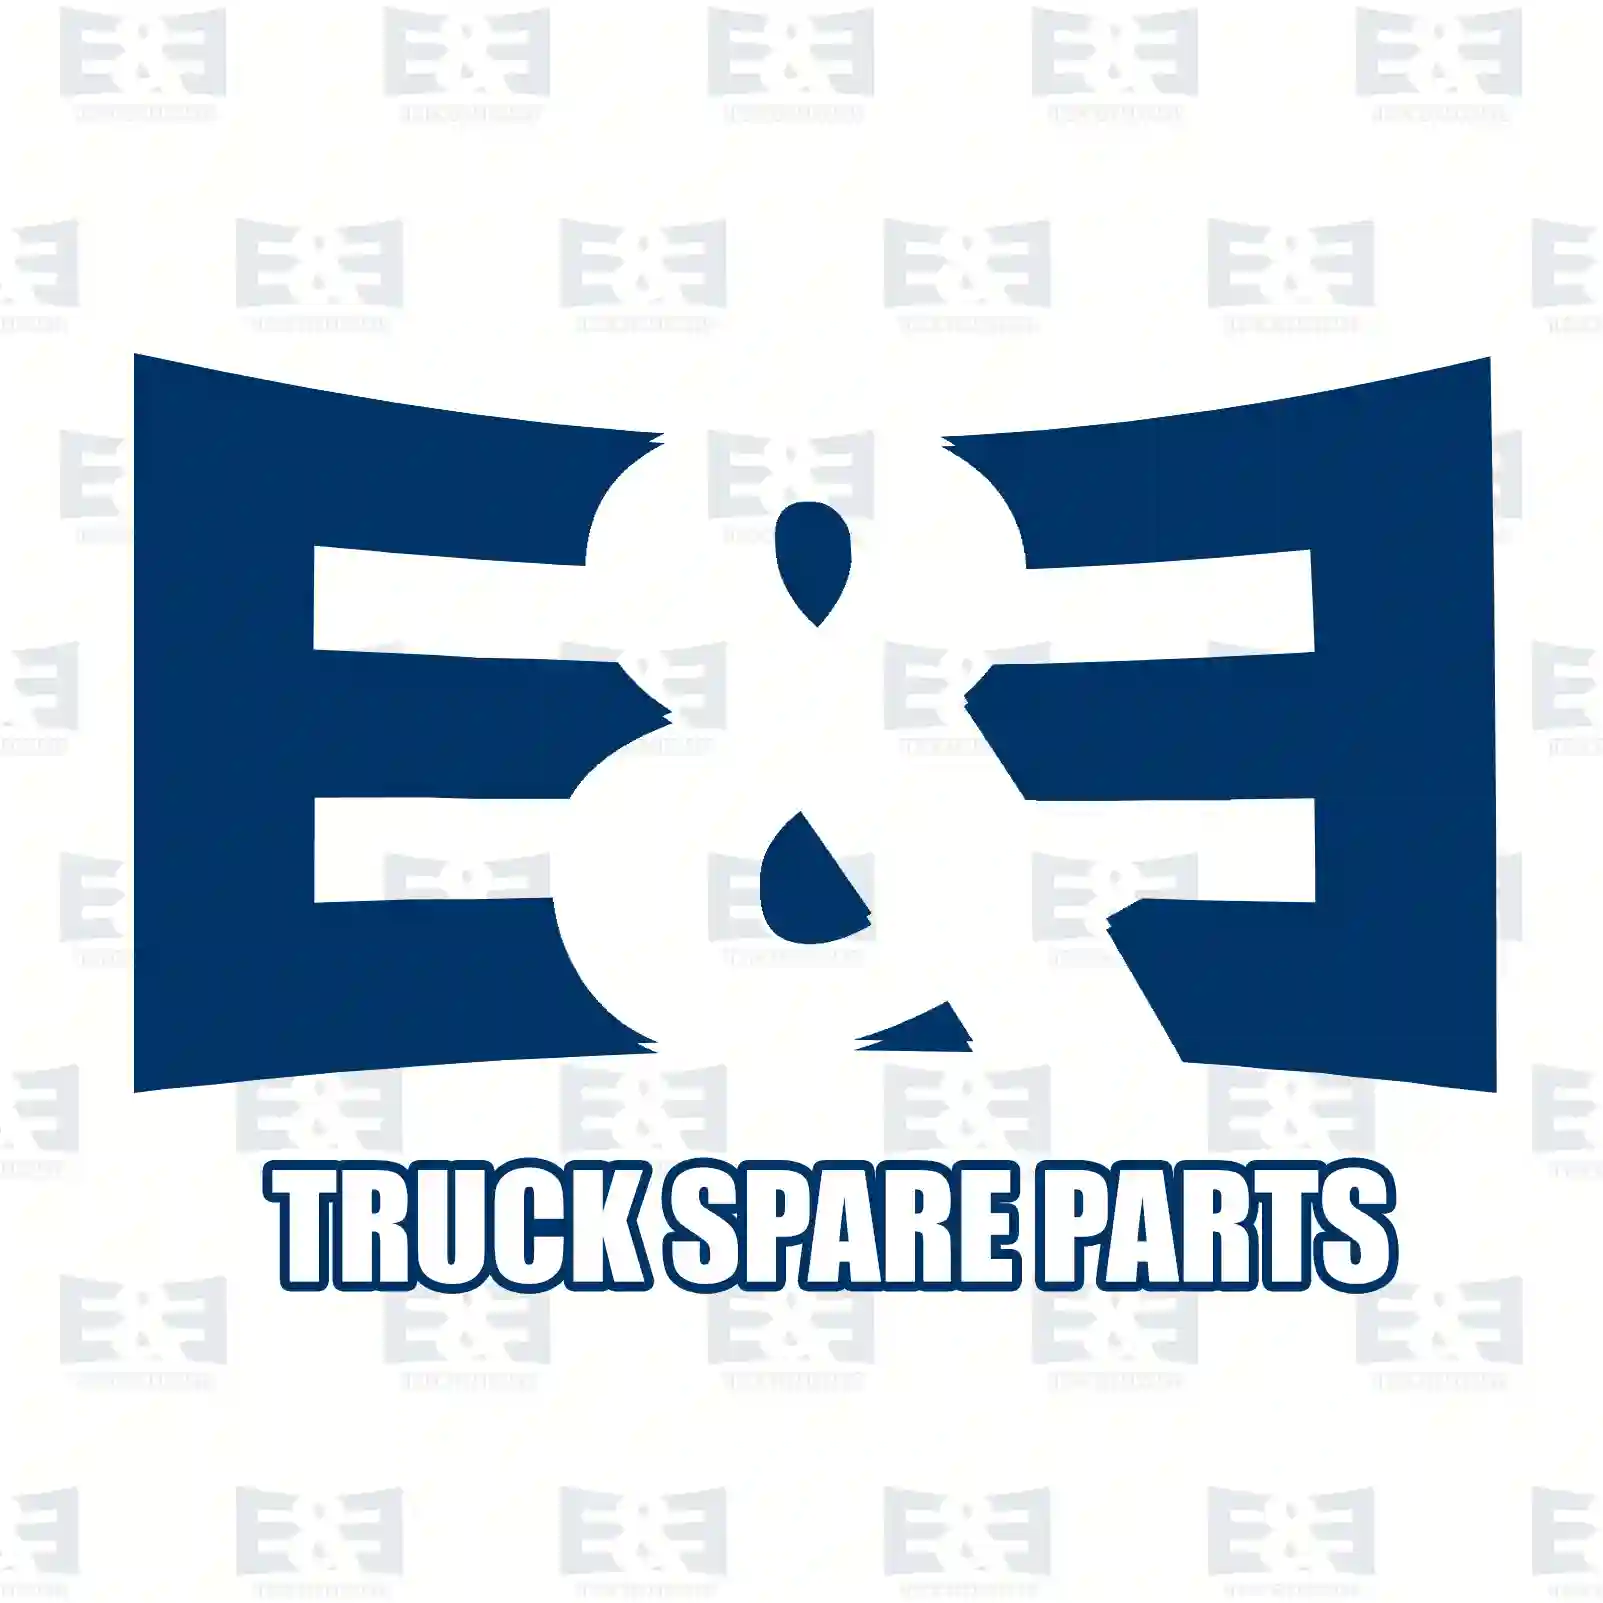 Spring bolt kit, 2E2270920, 2097425S1, 355148S1, ||  2E2270920 E&E Truck Spare Parts | Truck Spare Parts, Auotomotive Spare Parts Spring bolt kit, 2E2270920, 2097425S1, 355148S1, ||  2E2270920 E&E Truck Spare Parts | Truck Spare Parts, Auotomotive Spare Parts